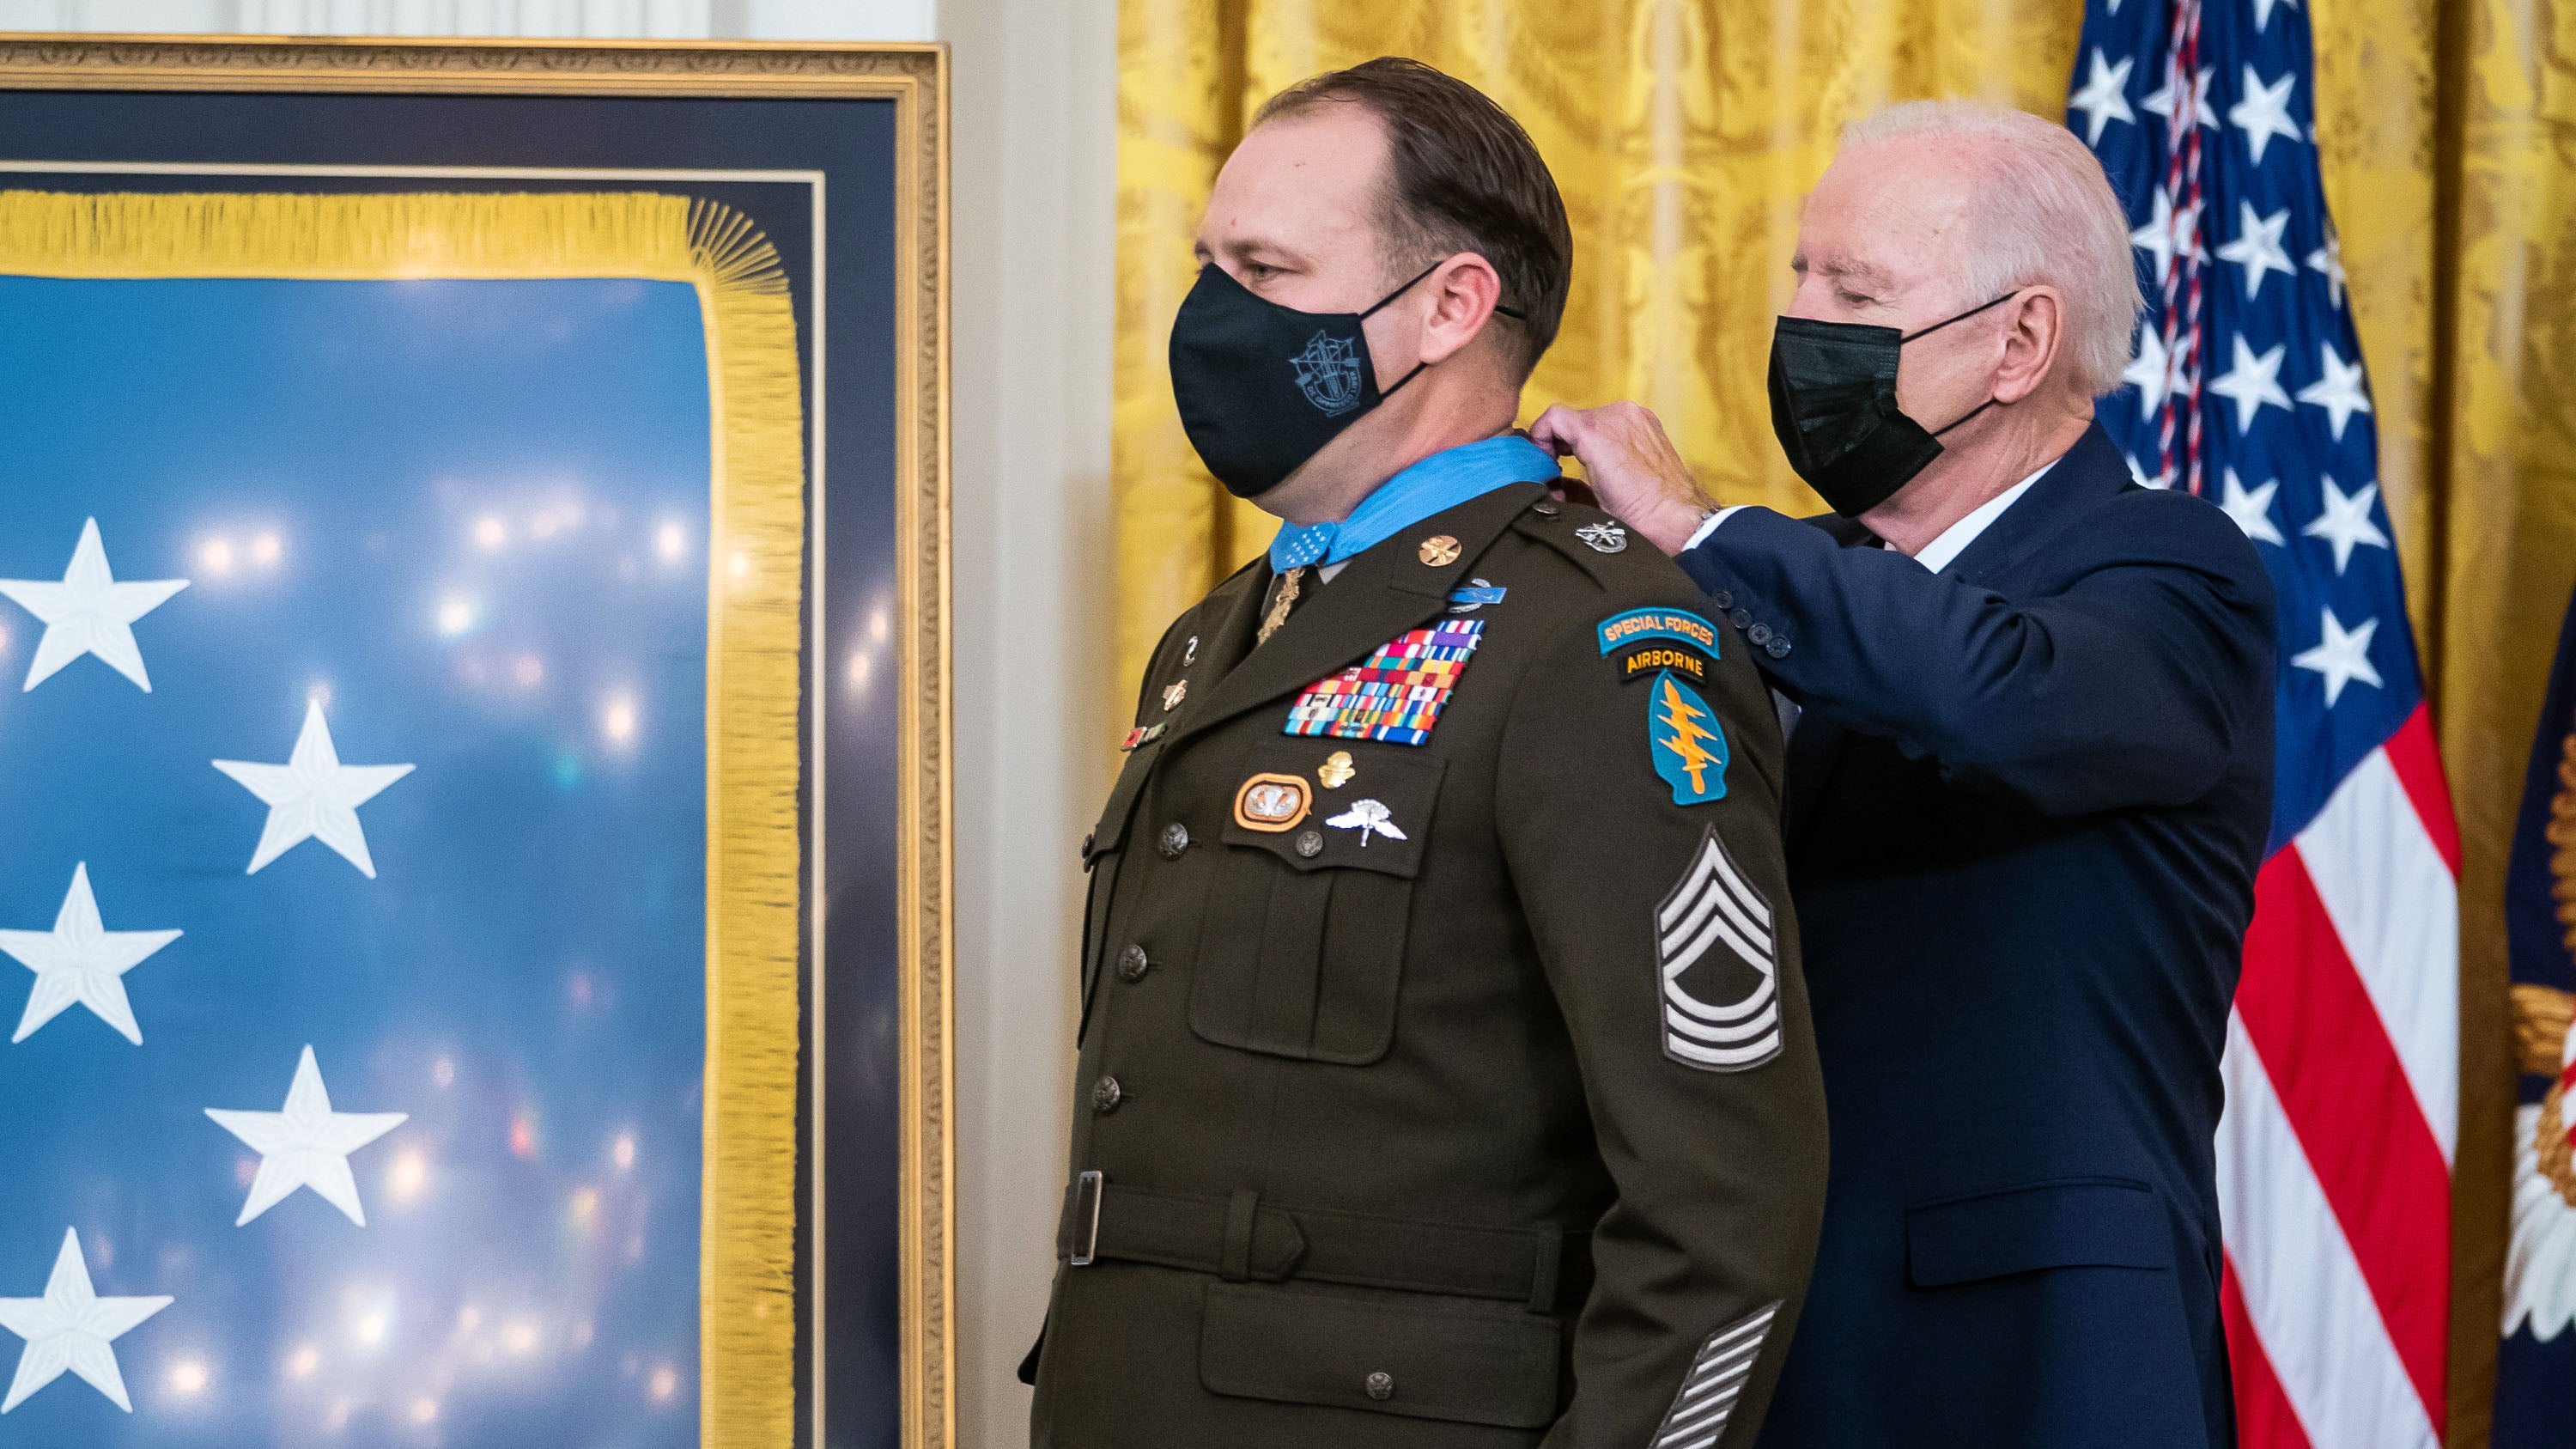 President Biden secures Medal of Honor 